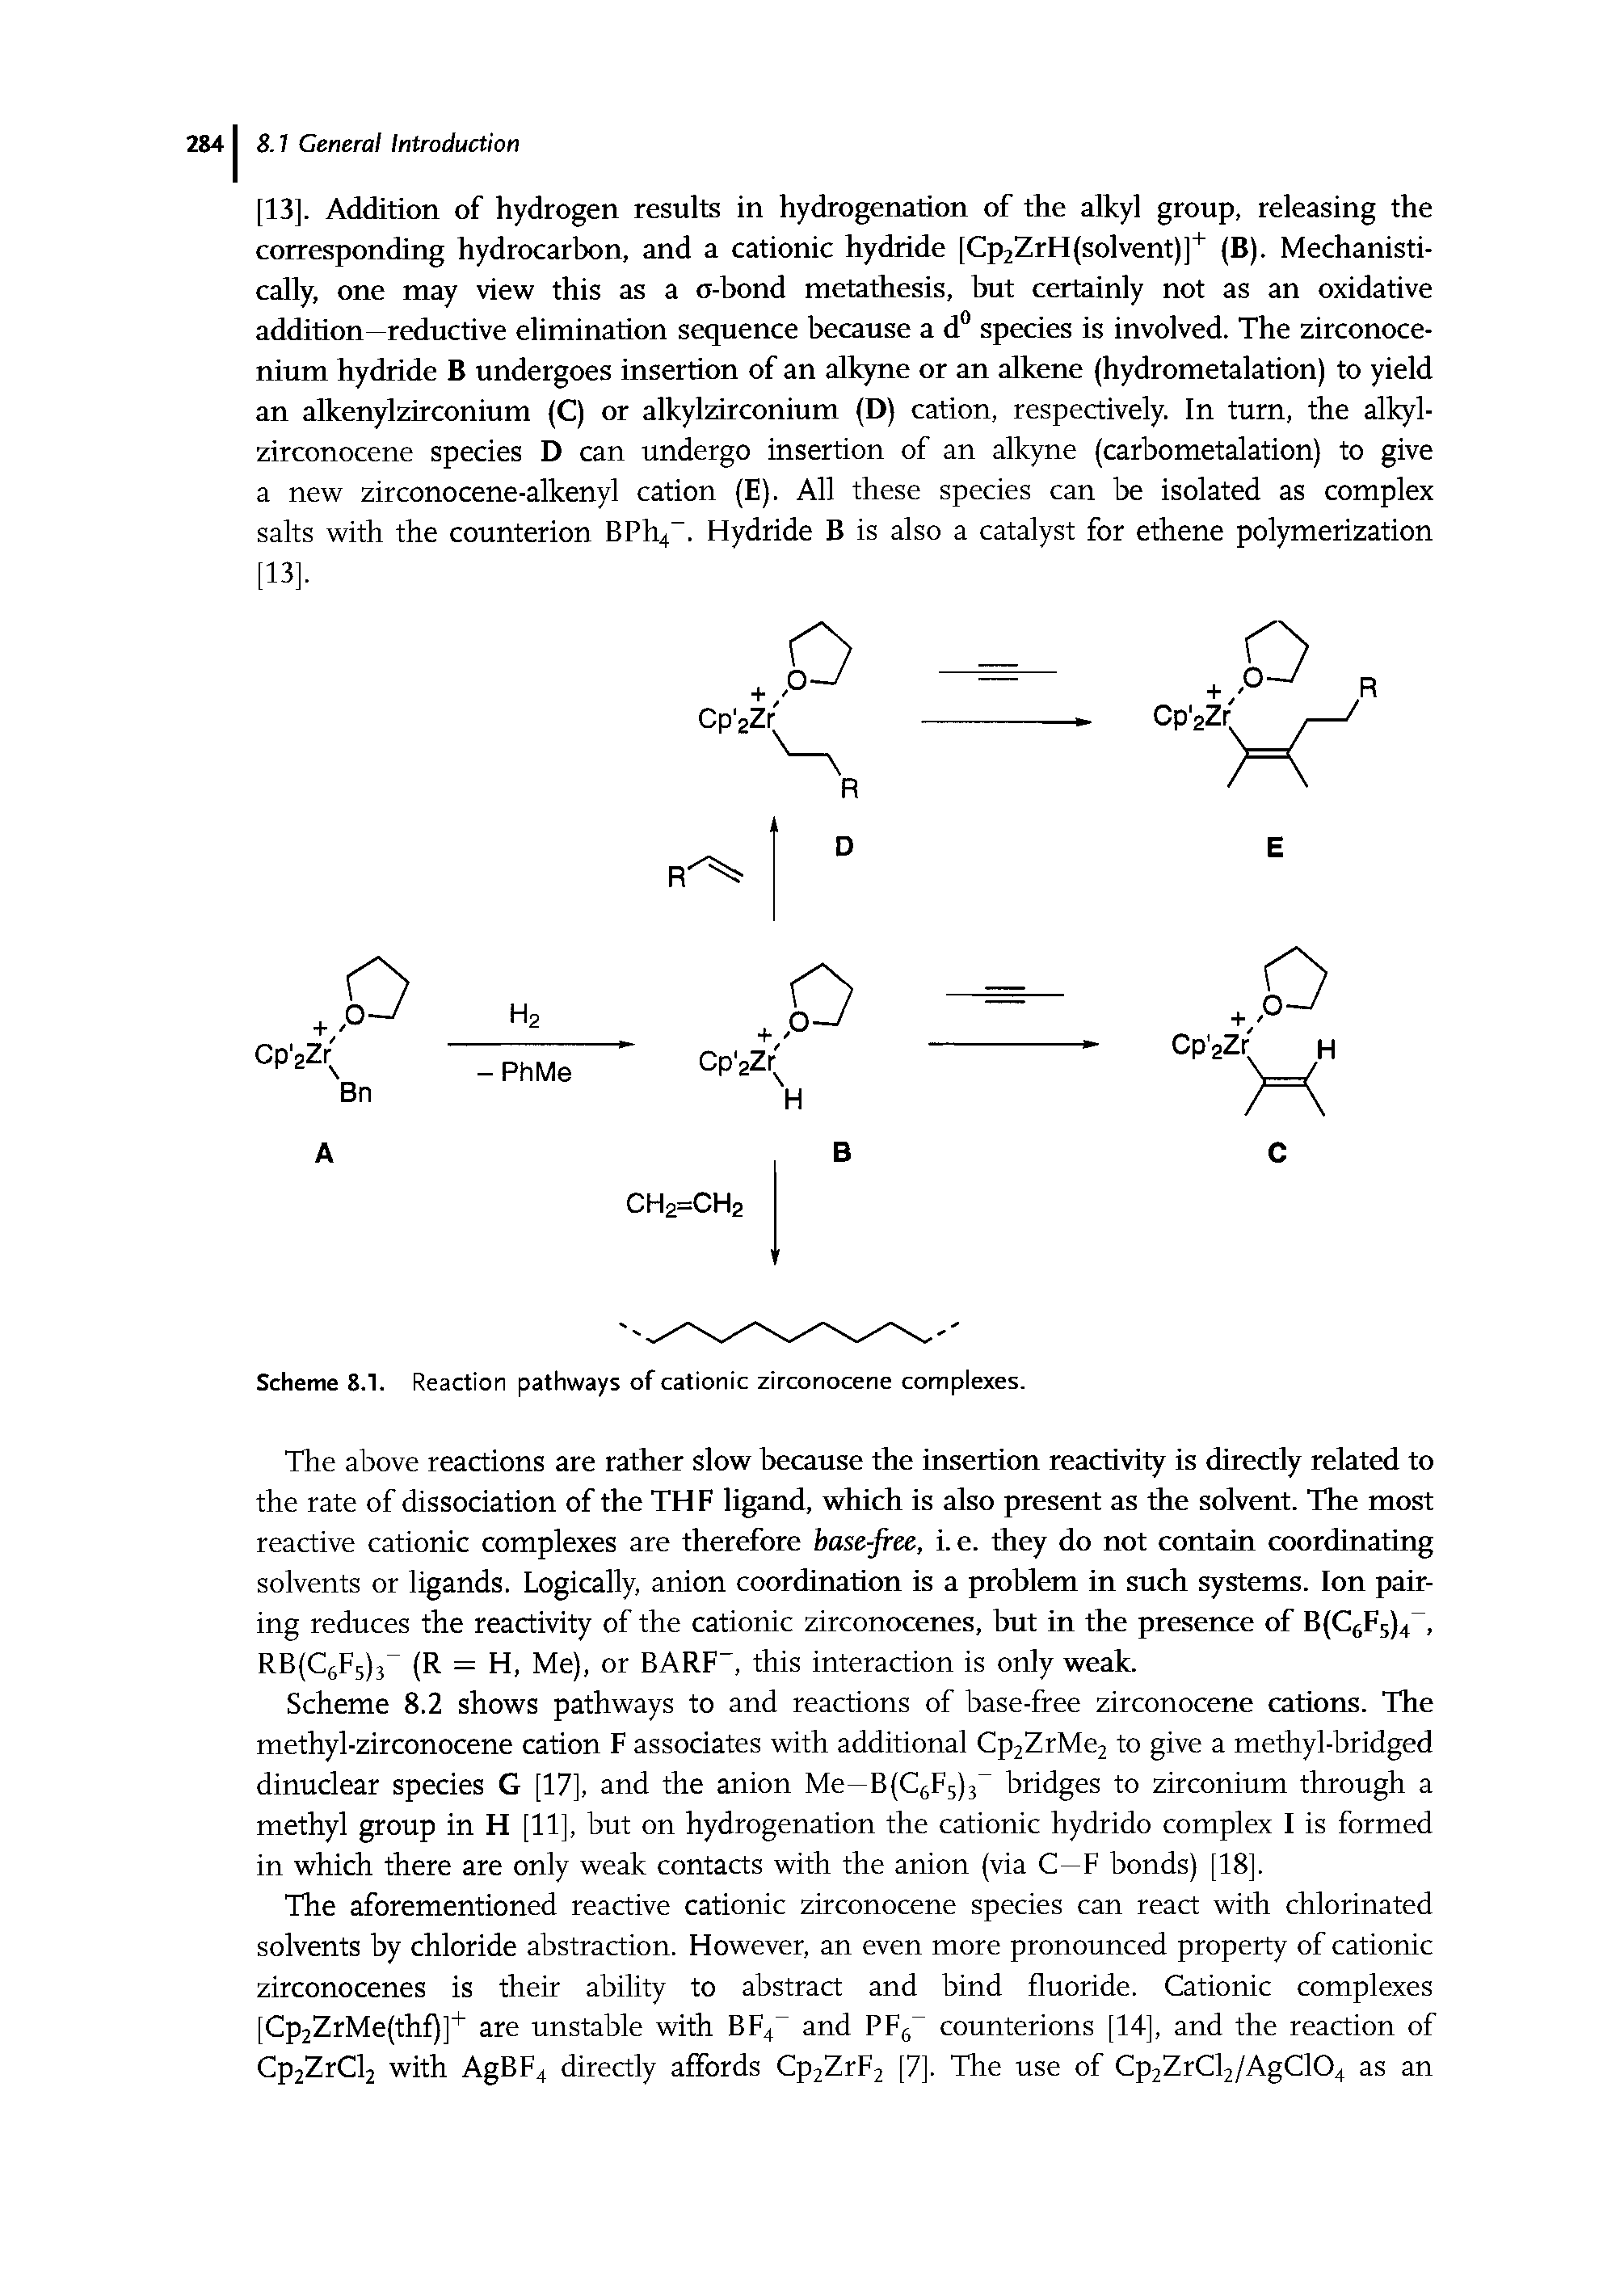 Scheme 8.1. Reaction pathways of cationic zirconocene complexes.